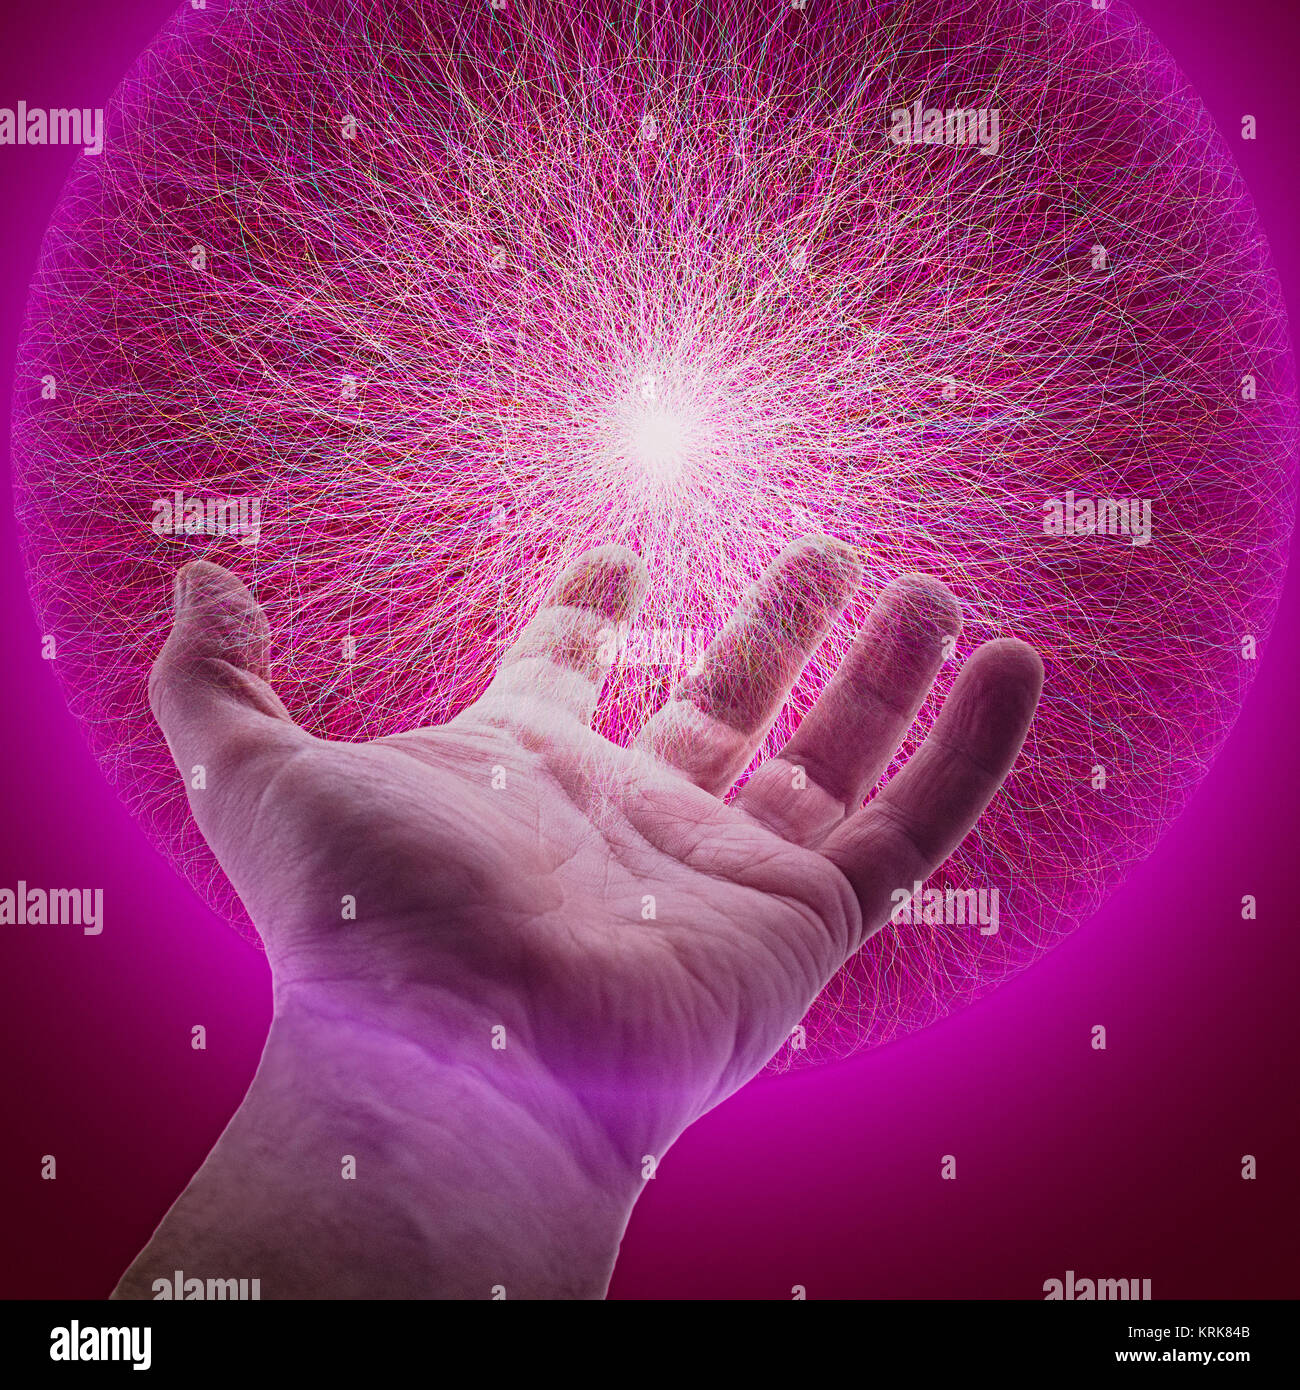 Hand of Caucasian man holding glowing sphere of purple energy Stock Photo